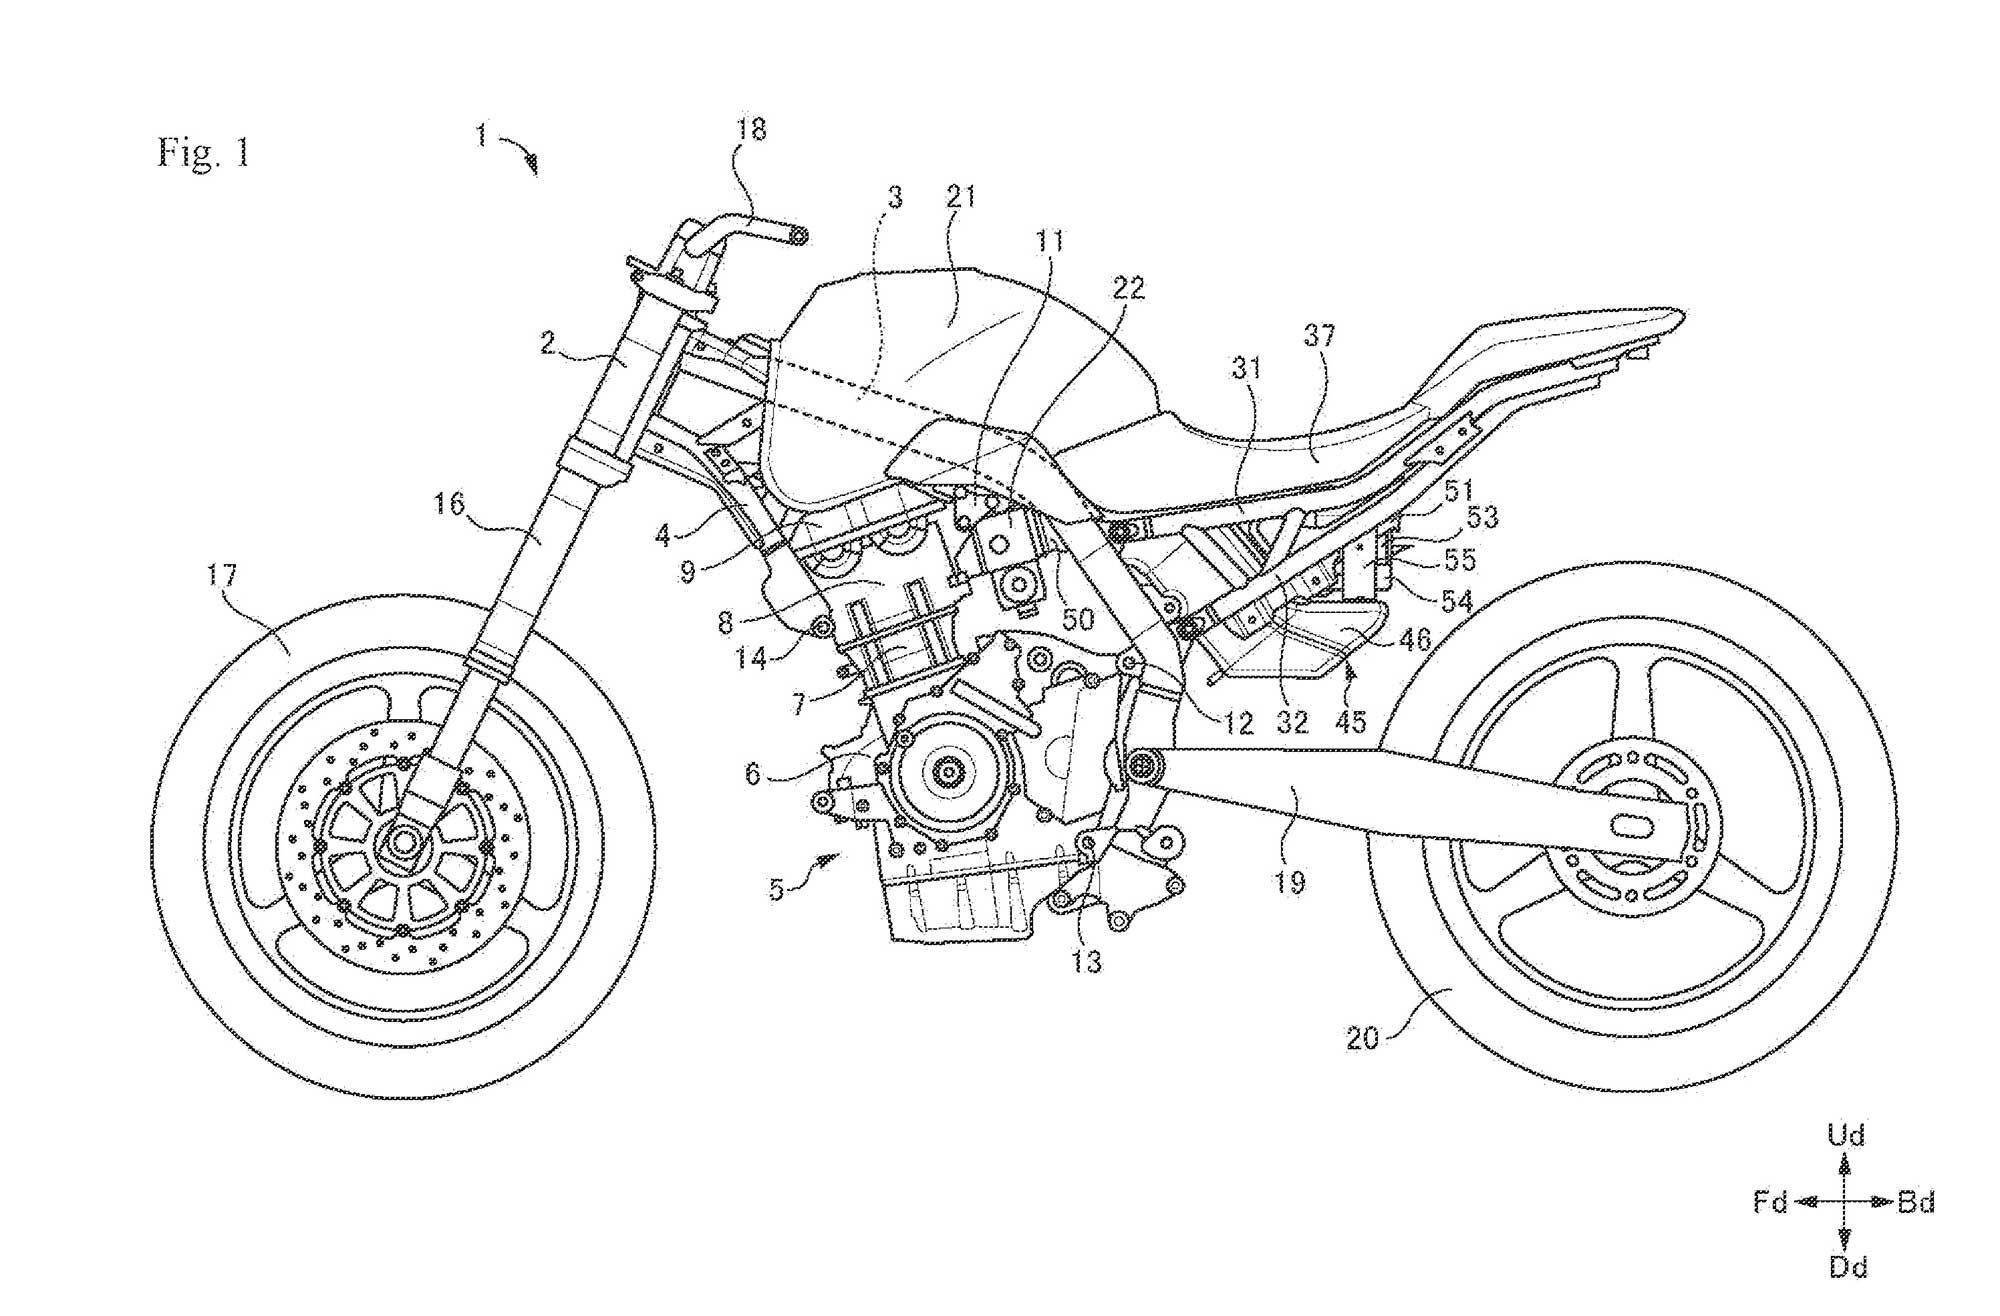 A new patent shows an SV650-style machine built around a DOHC 700cc engine design.